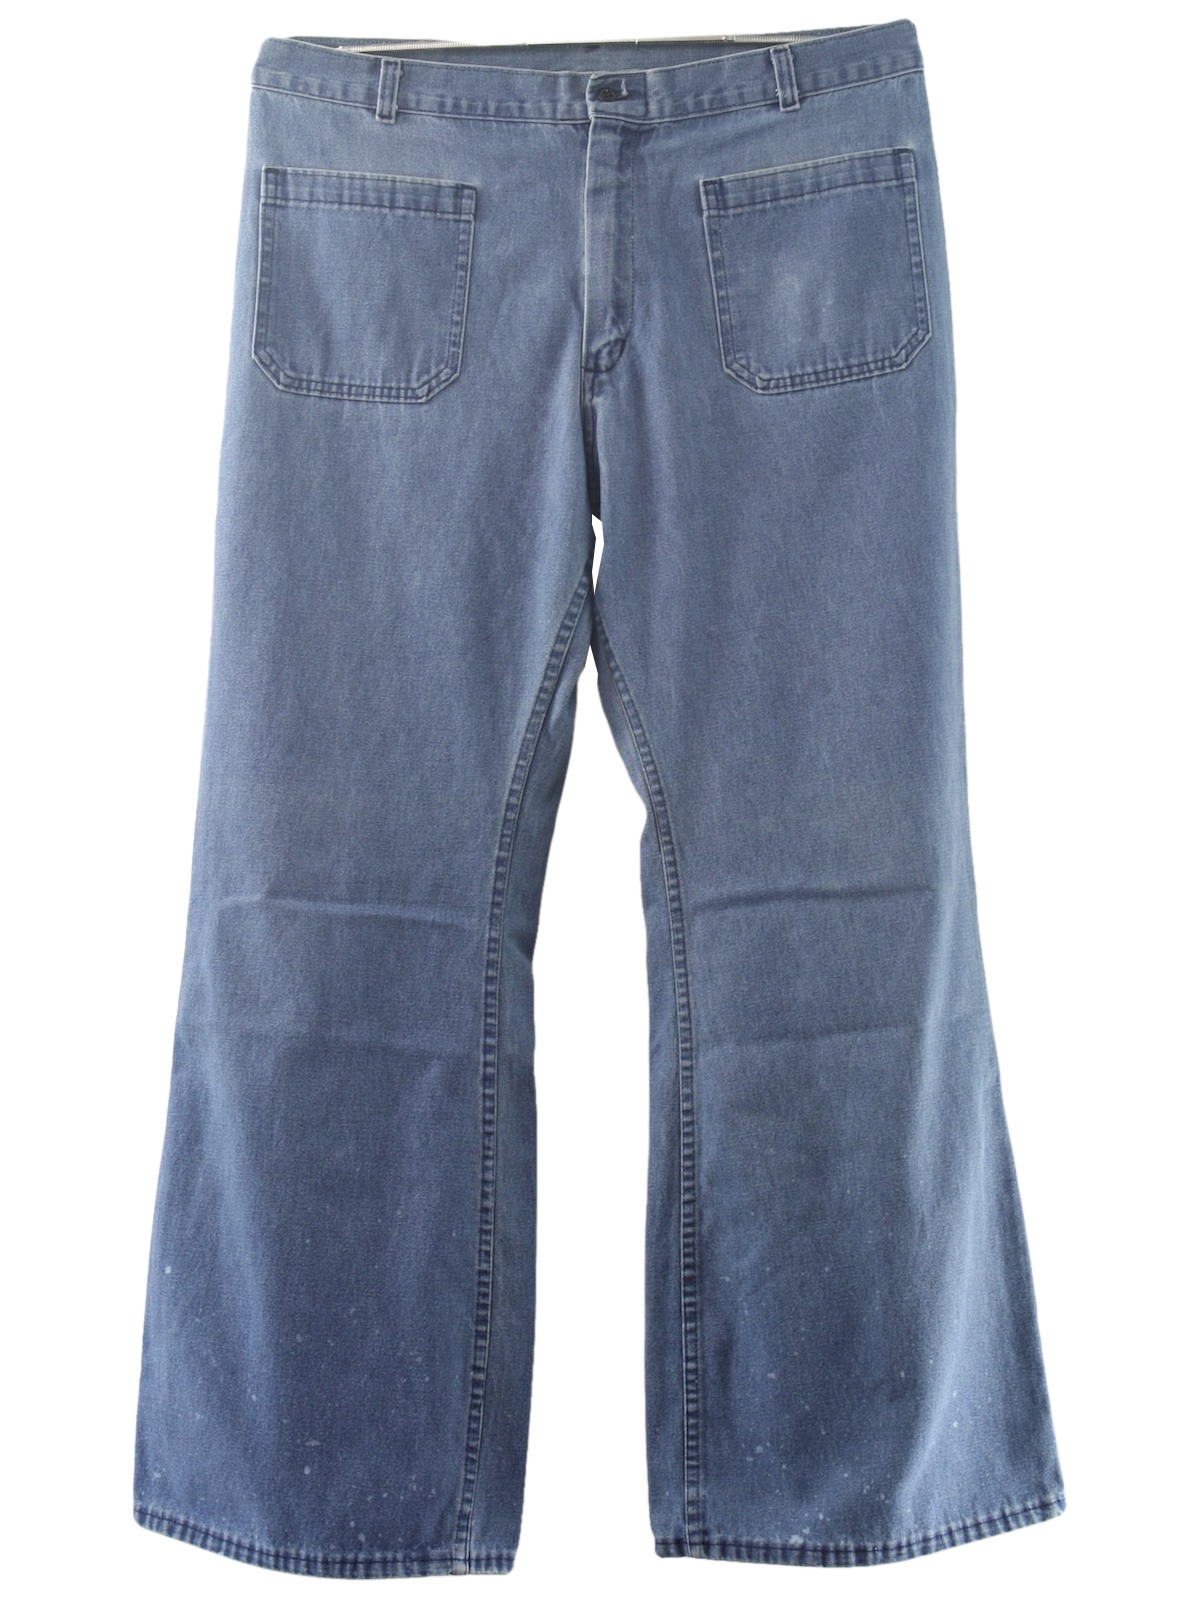 1970s Vintage Bellbottom Pants: 70s -Navdungaree- Mens heavily faded ...